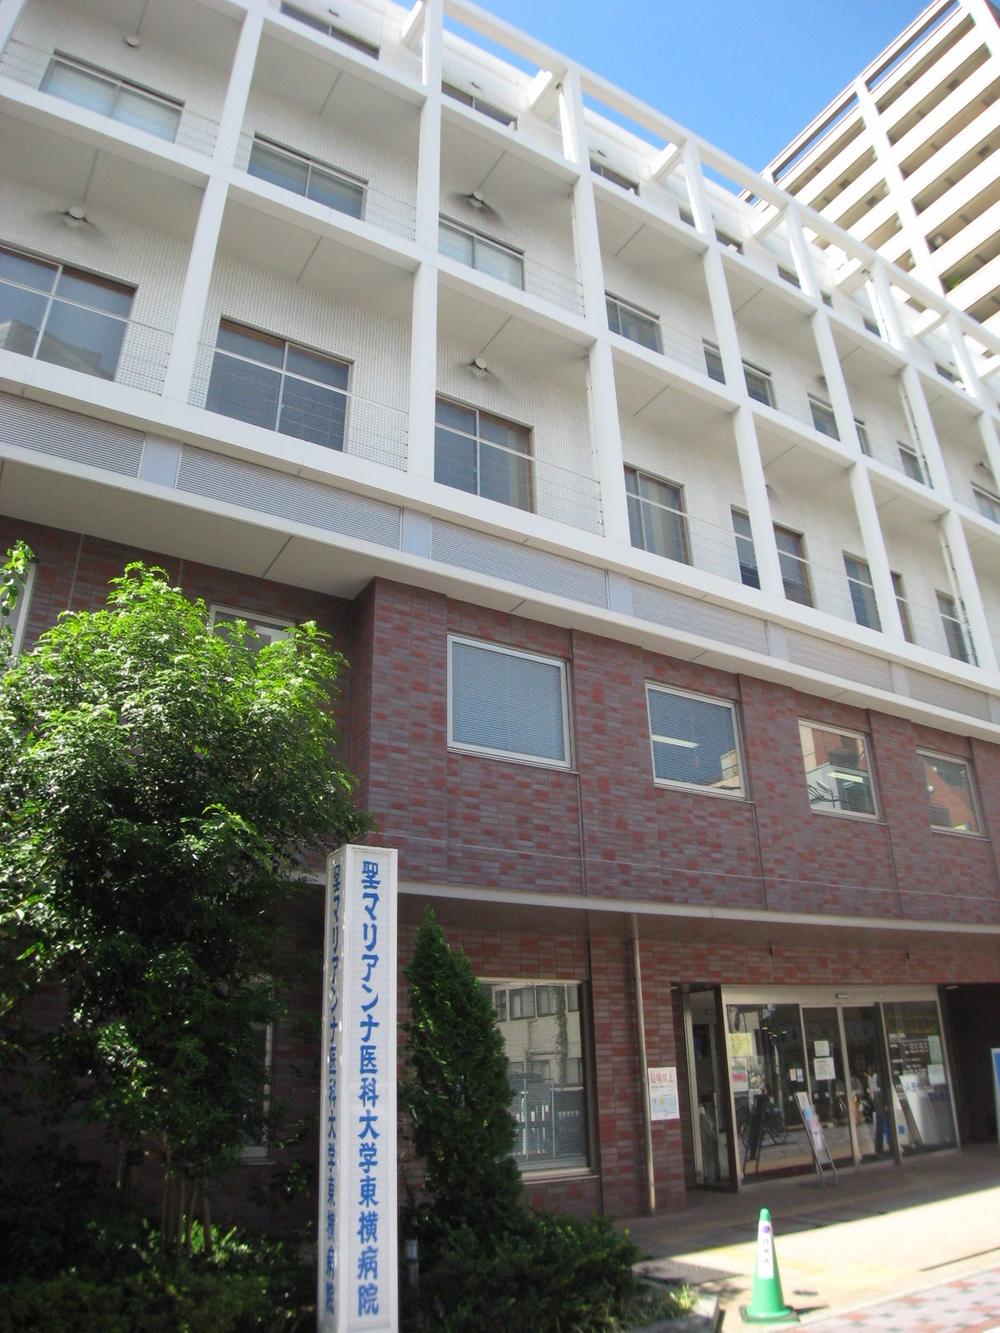 Hospital. St. Marianna University School of Medicine Toyoko Hospital walk 5 minutes